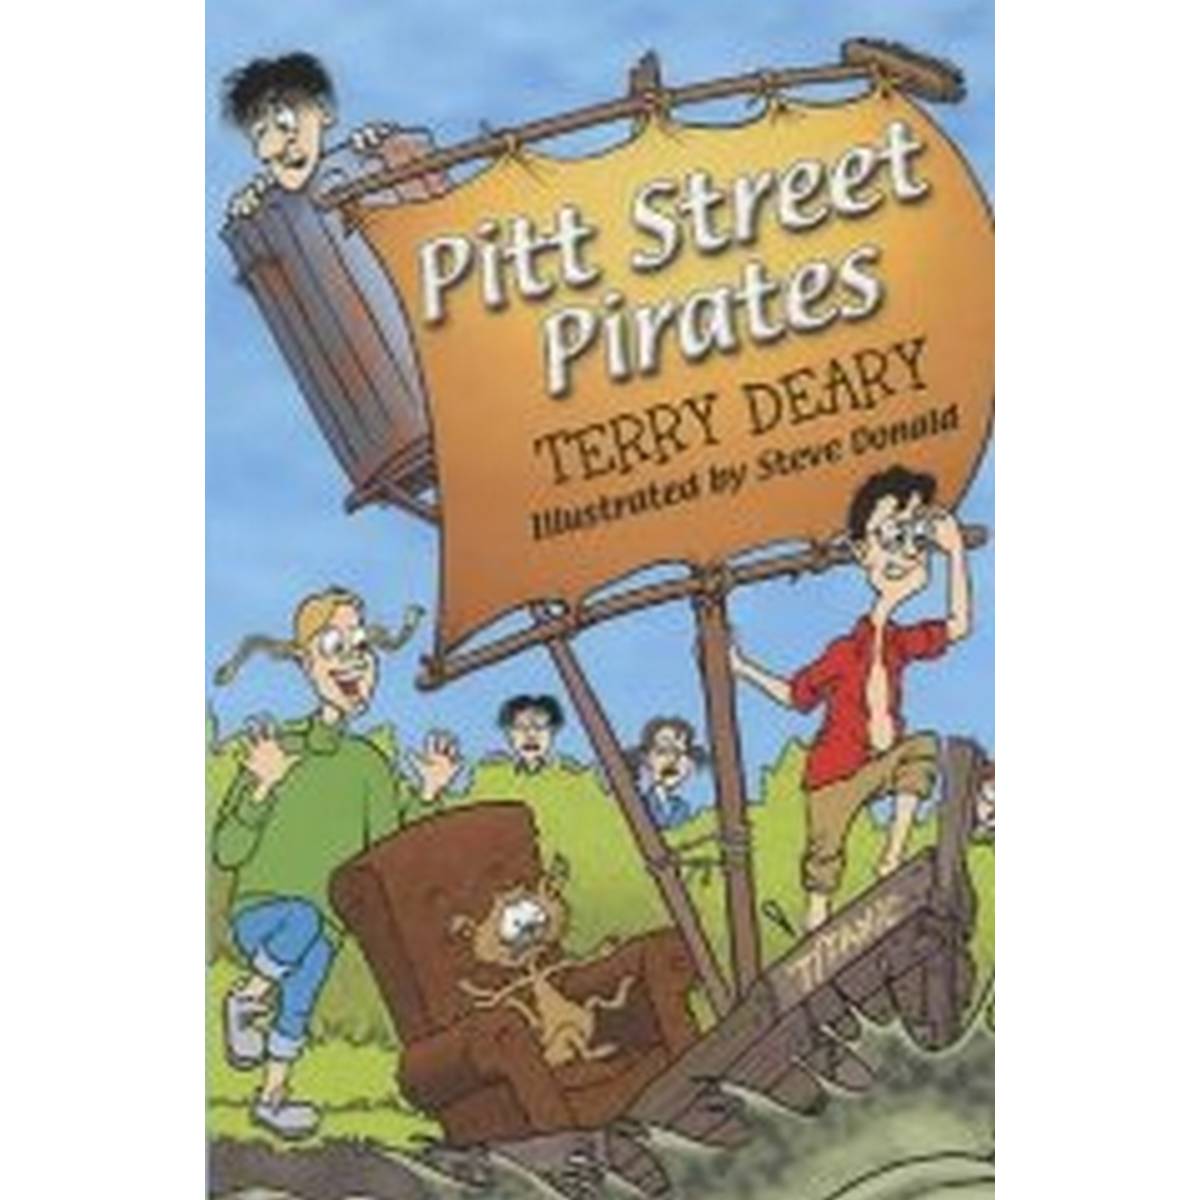 Pitt Street Pirates